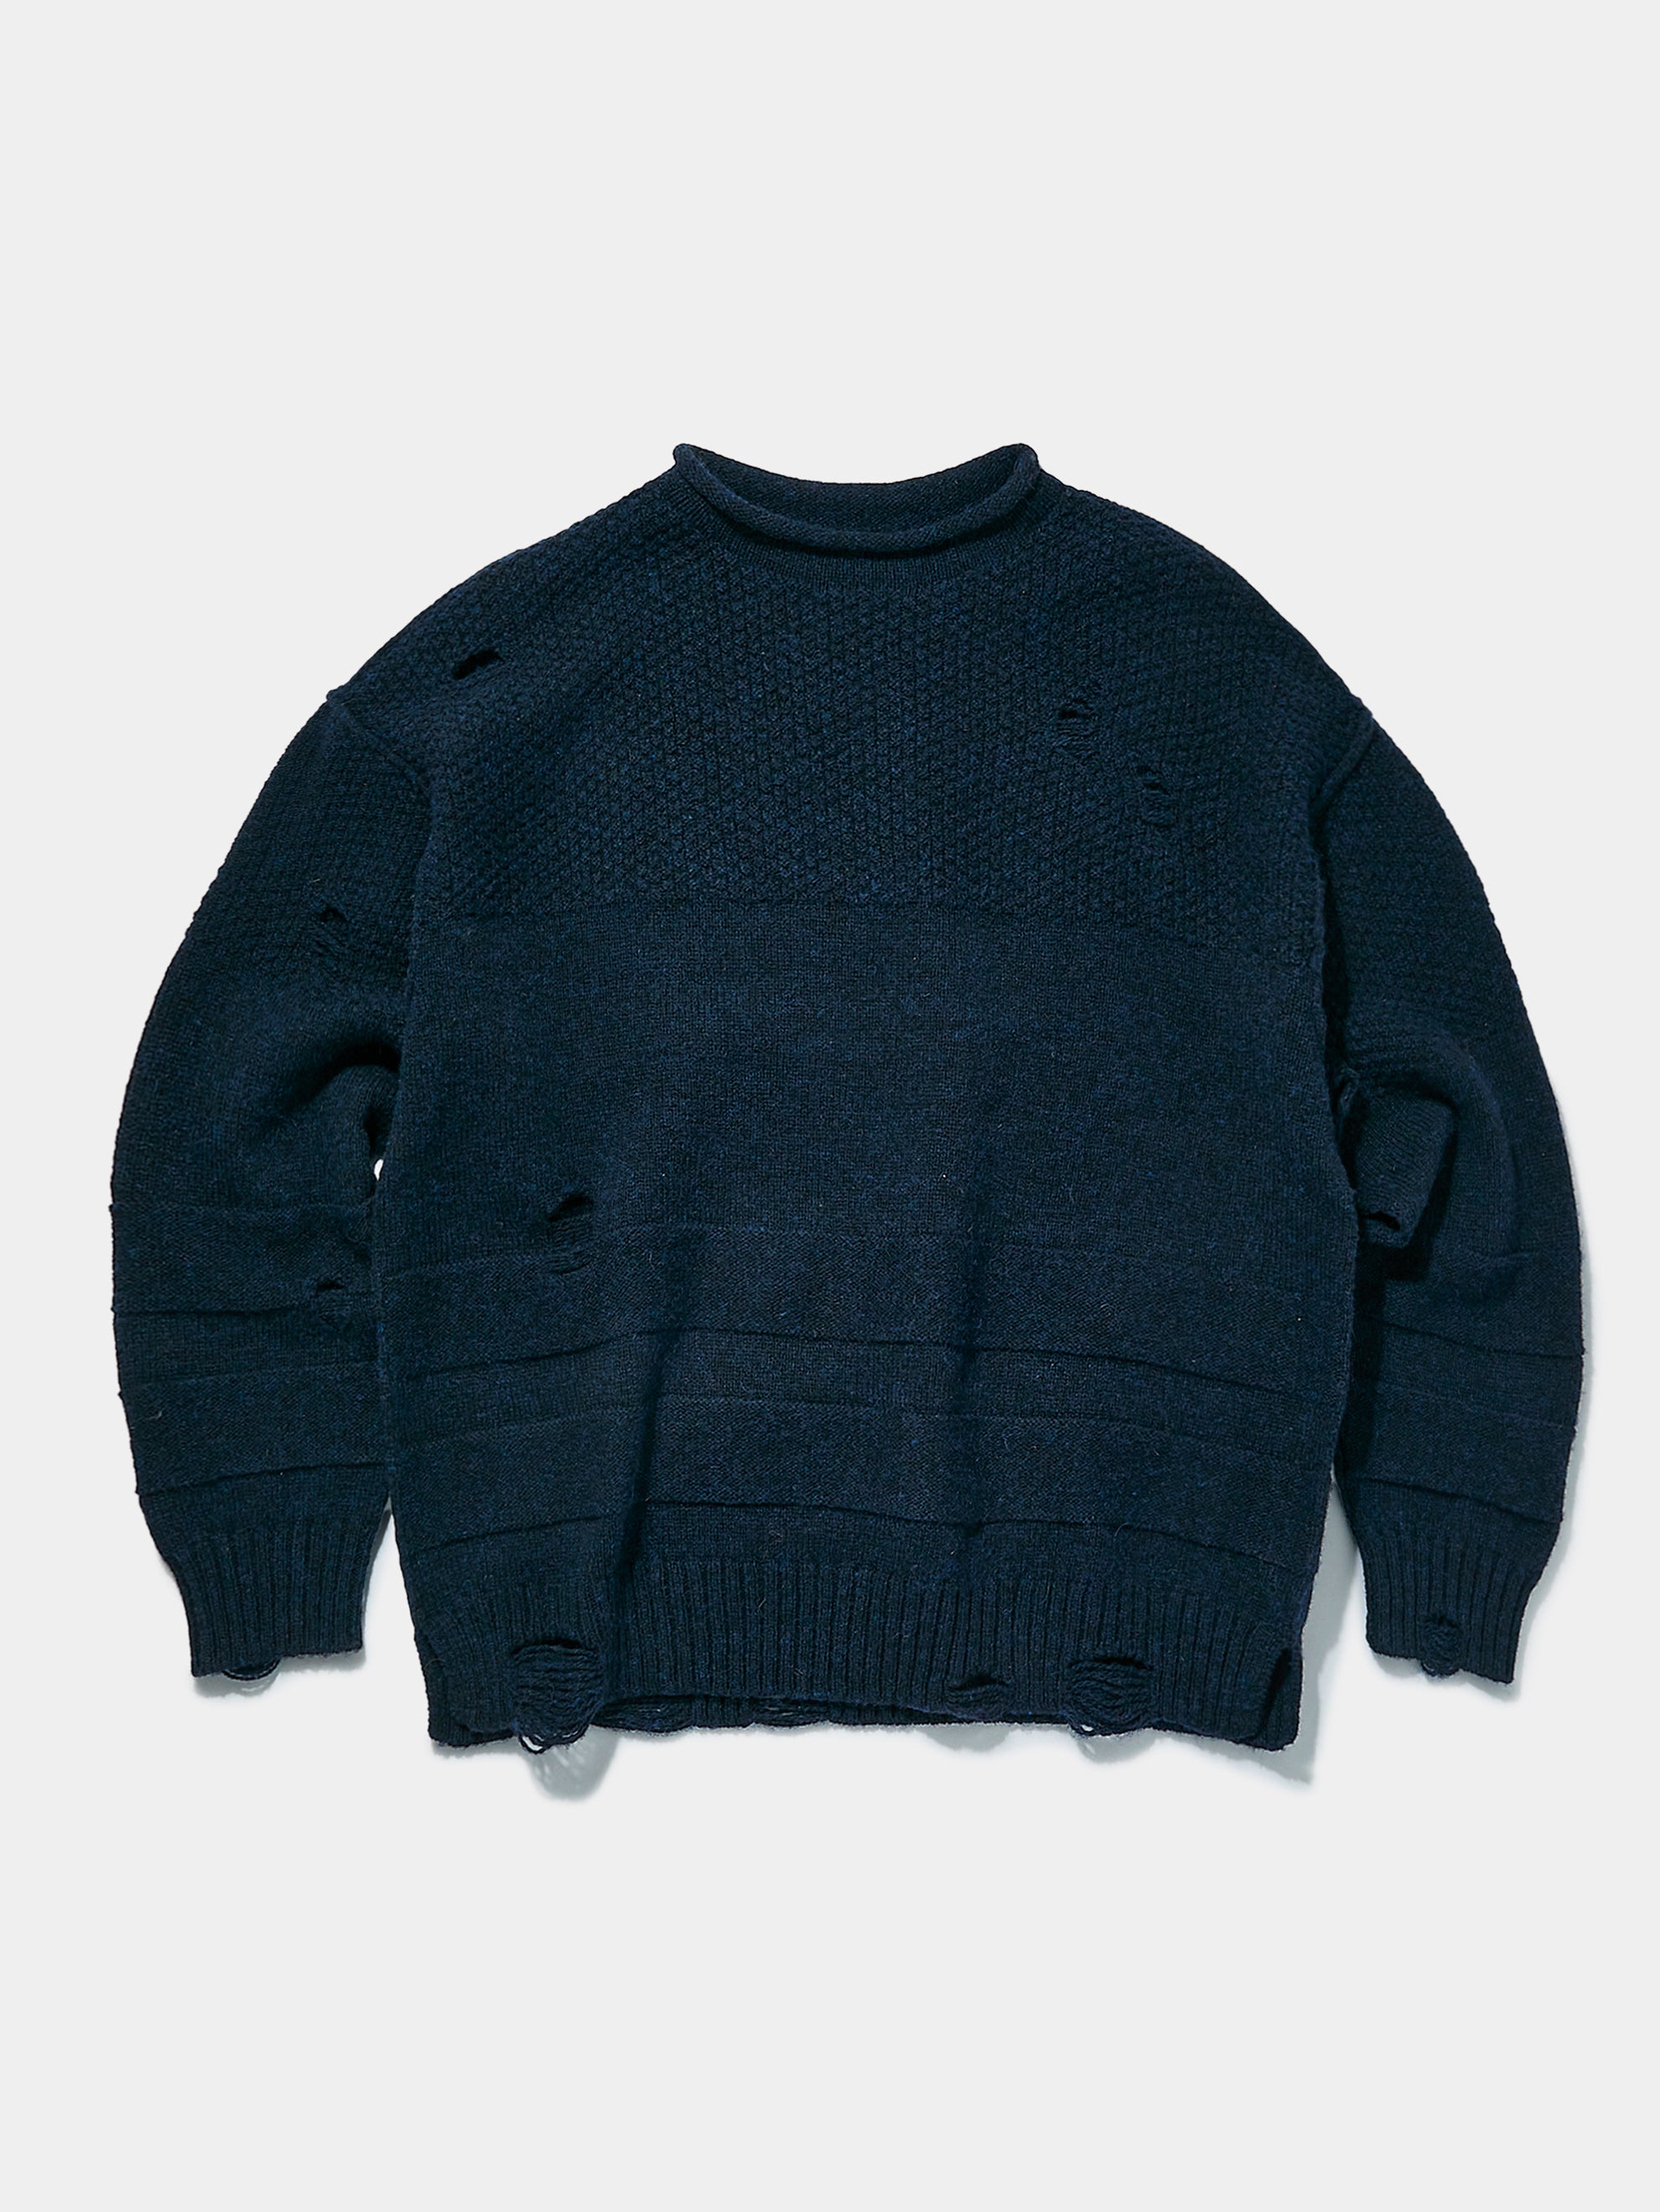 Union x J.Crew Rollneck Knit Sweater (Midnight Blue)